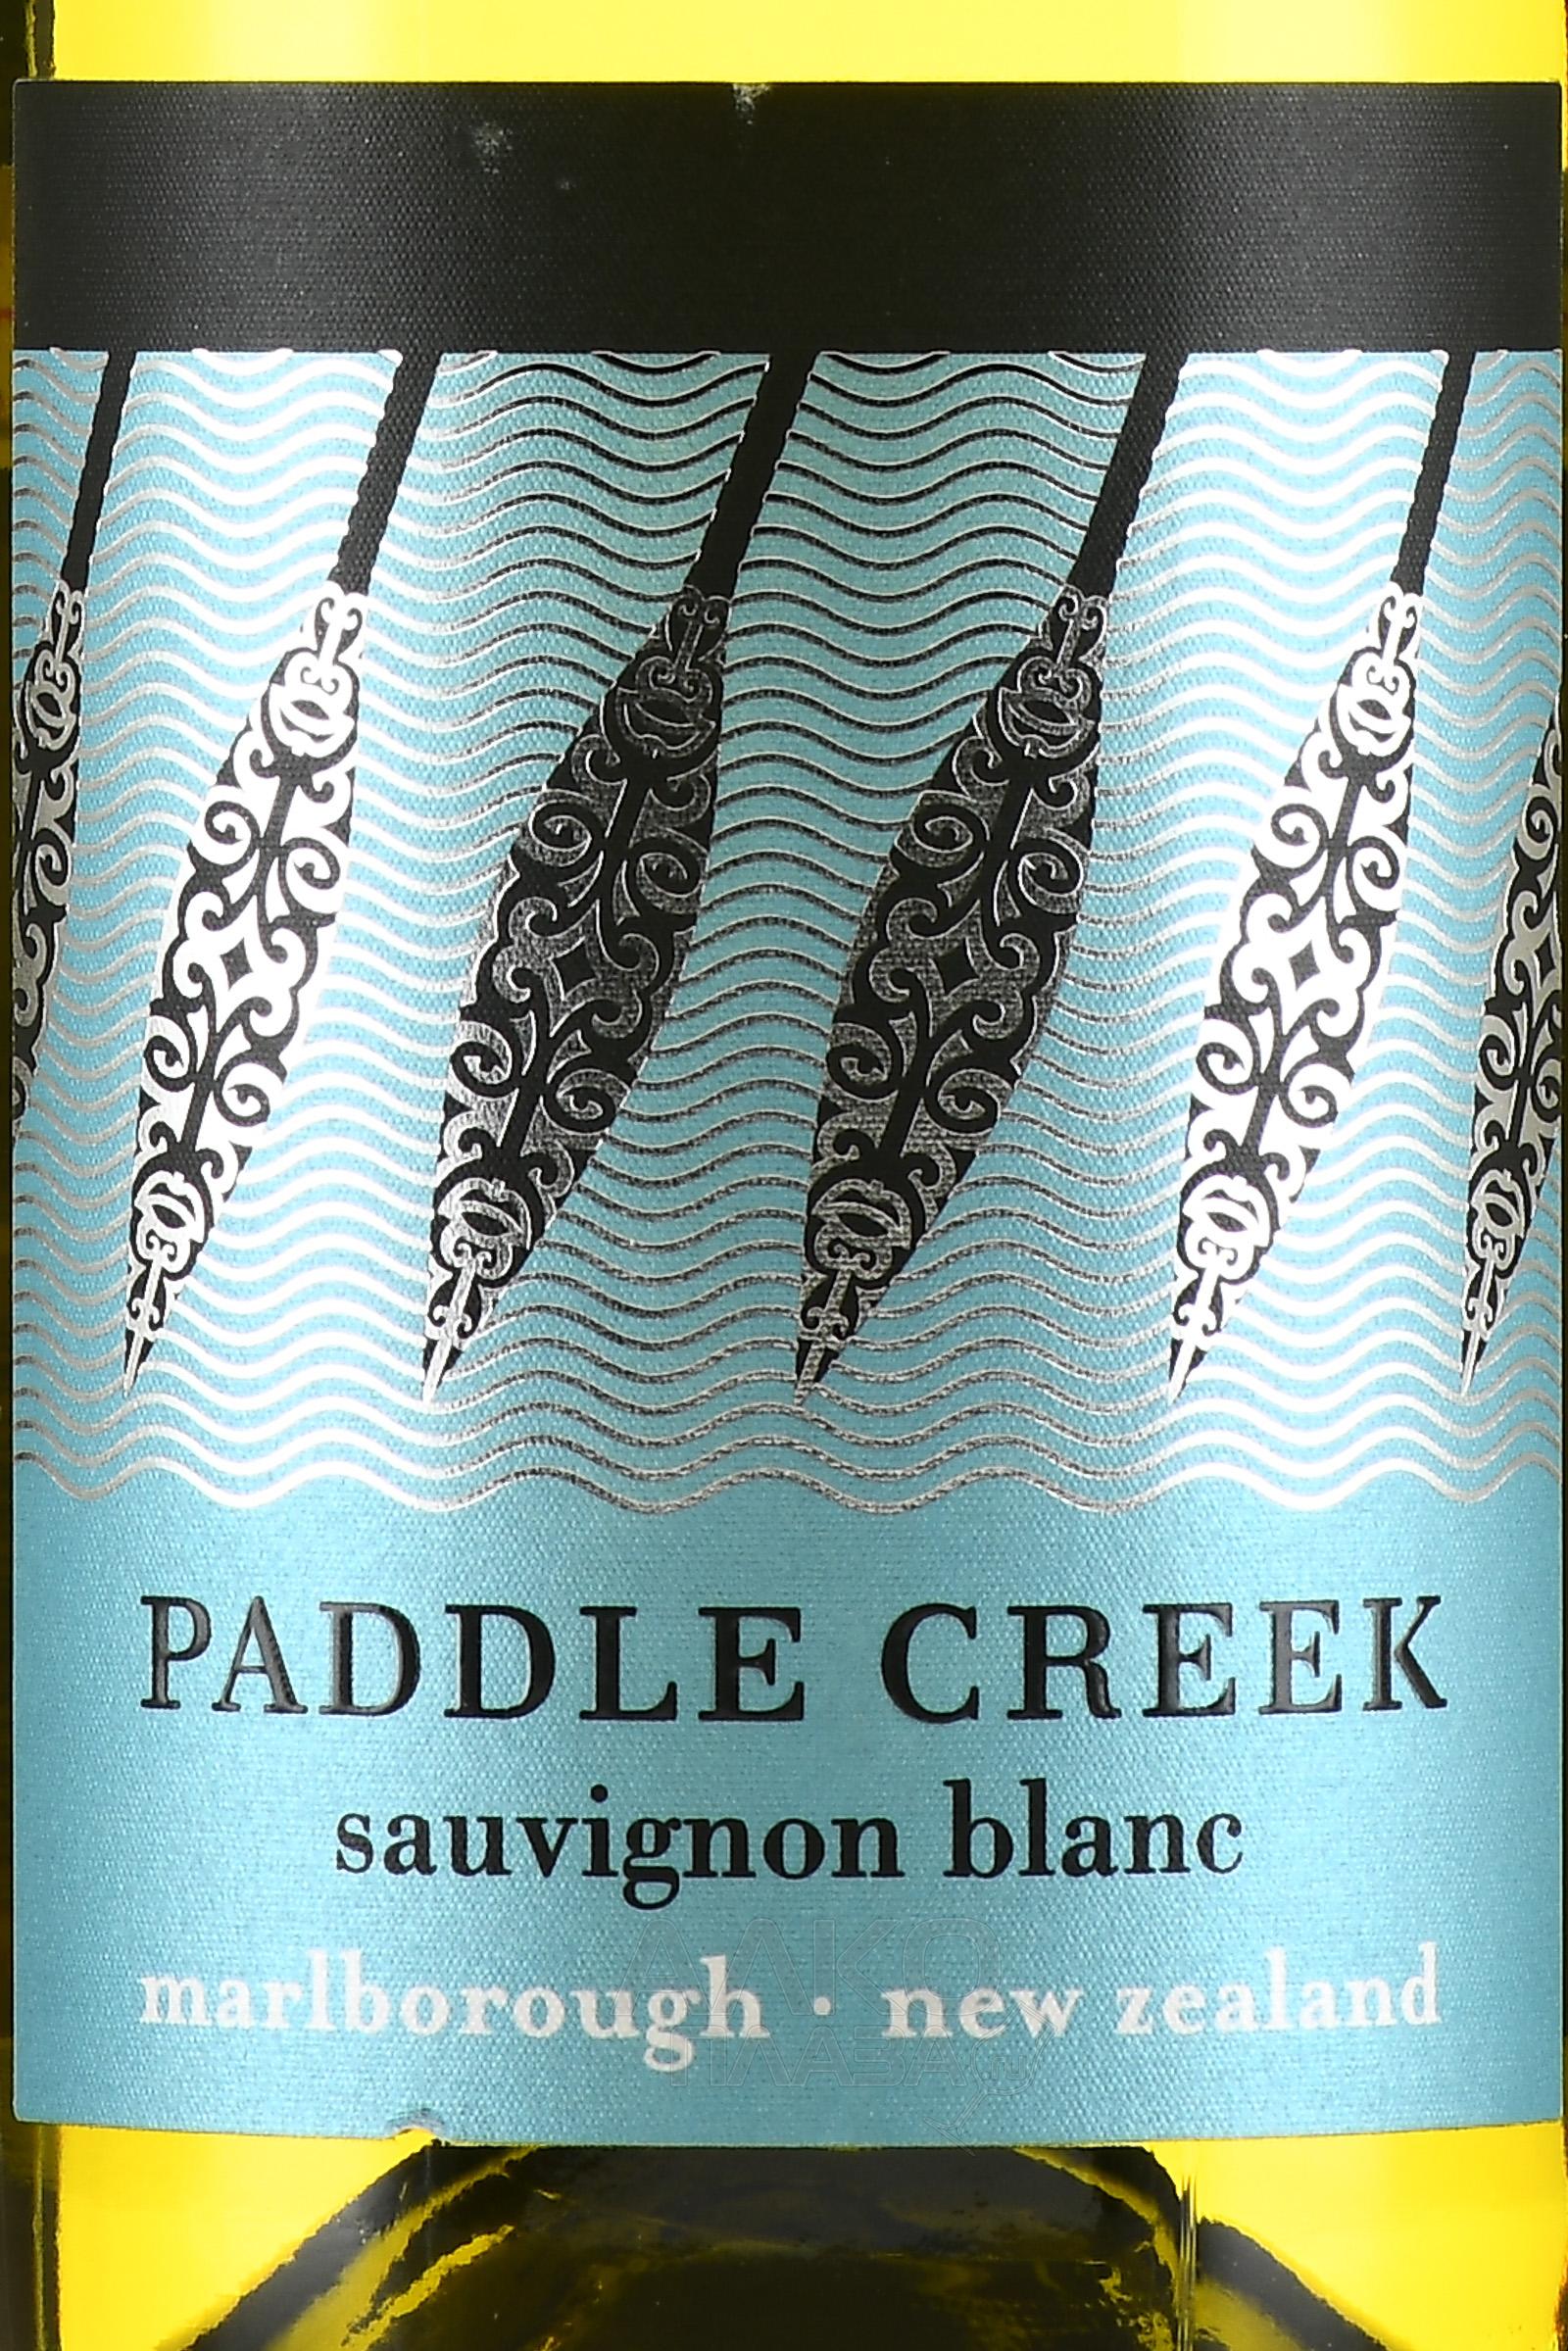 Паддл крик. Вино паддл крик Совиньон Блан. Paddle Creek Sauvignon Blanc. Падл крик Совиньон Блан Мальборо. Вино Paddle Creek Sauvignon Blanc, Lake Road.